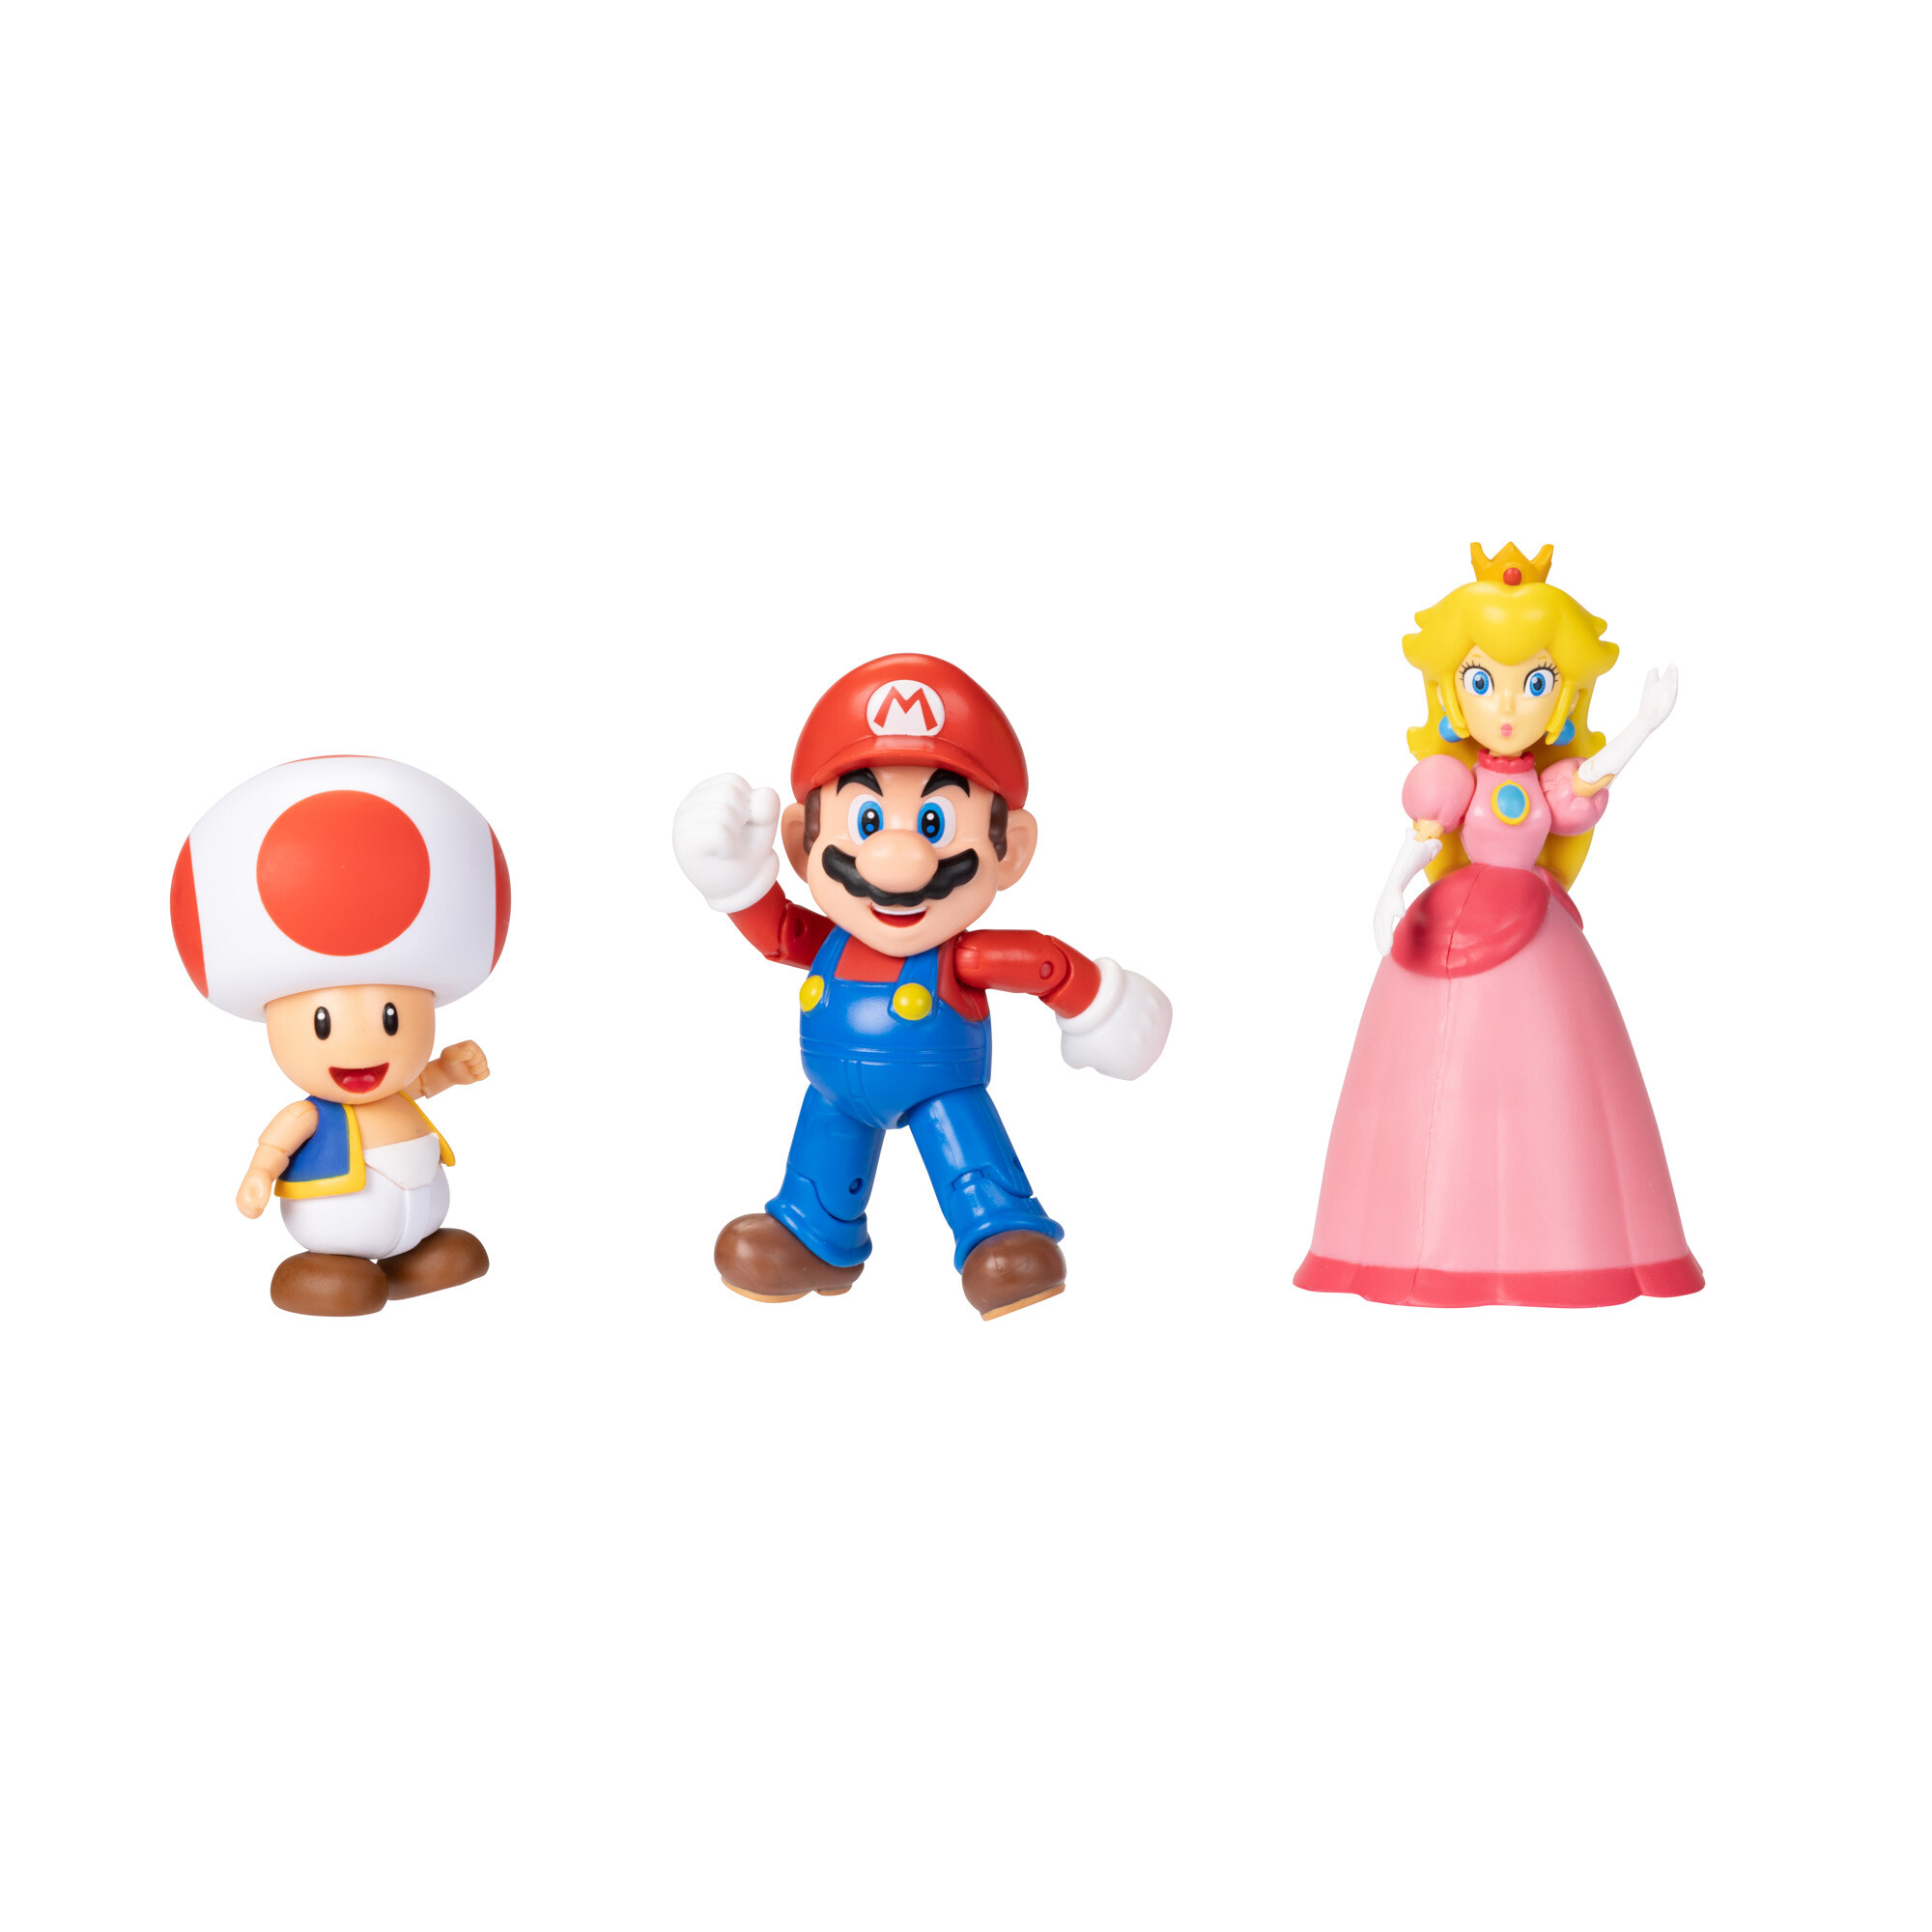 Nintendo super mario personaggi articolati 10 cm, pacco da 3 - NINTENDO, Super Mario